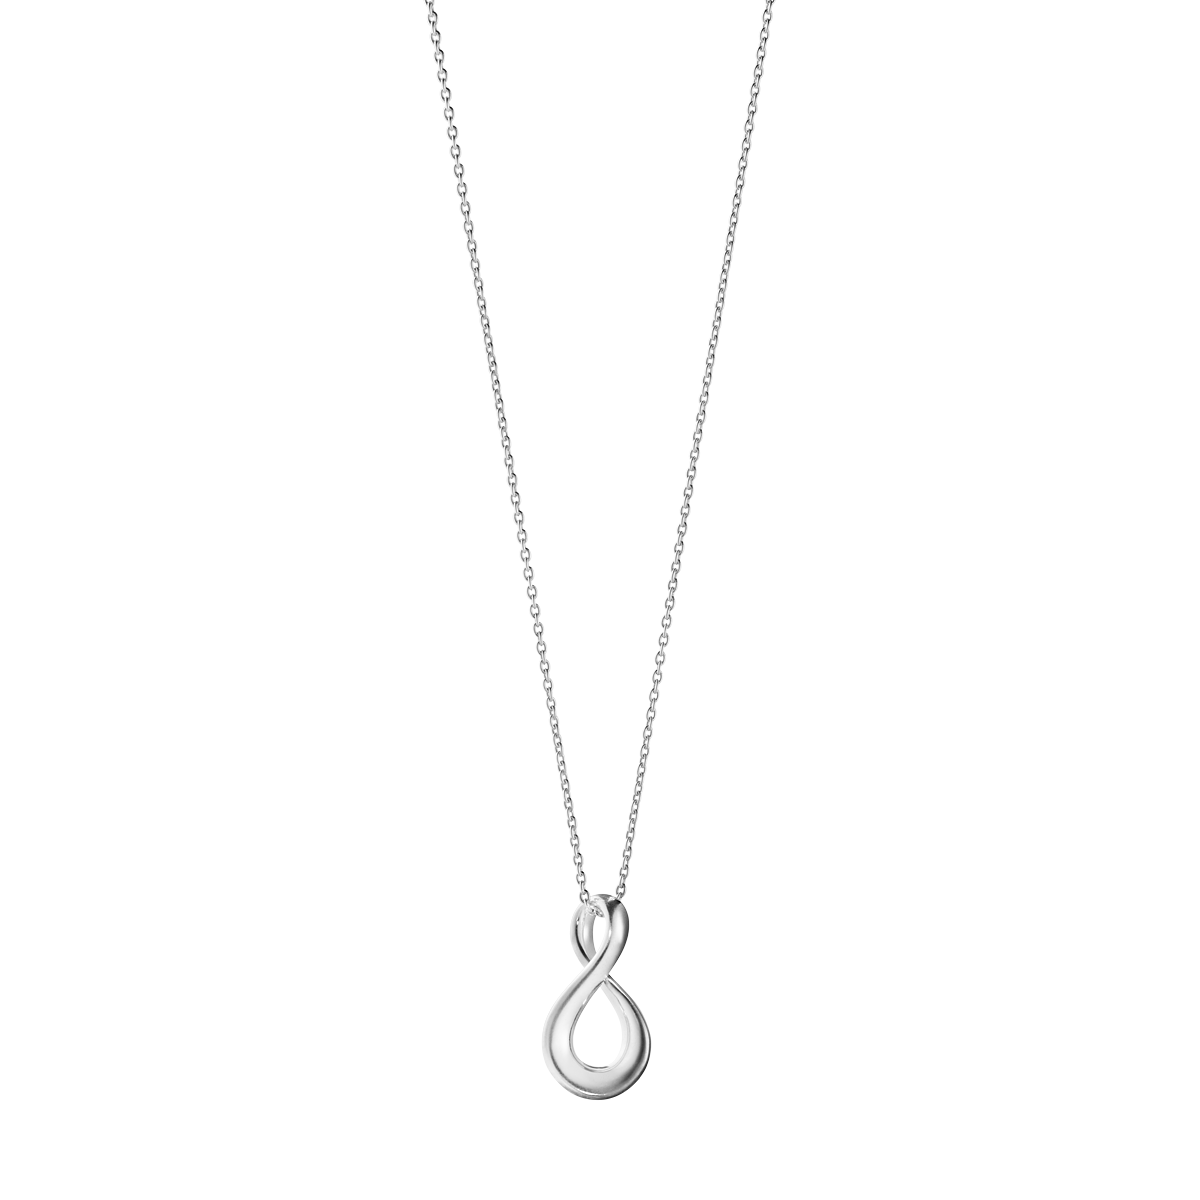 Infinity sterling silver pendant necklace   Georg Jensen